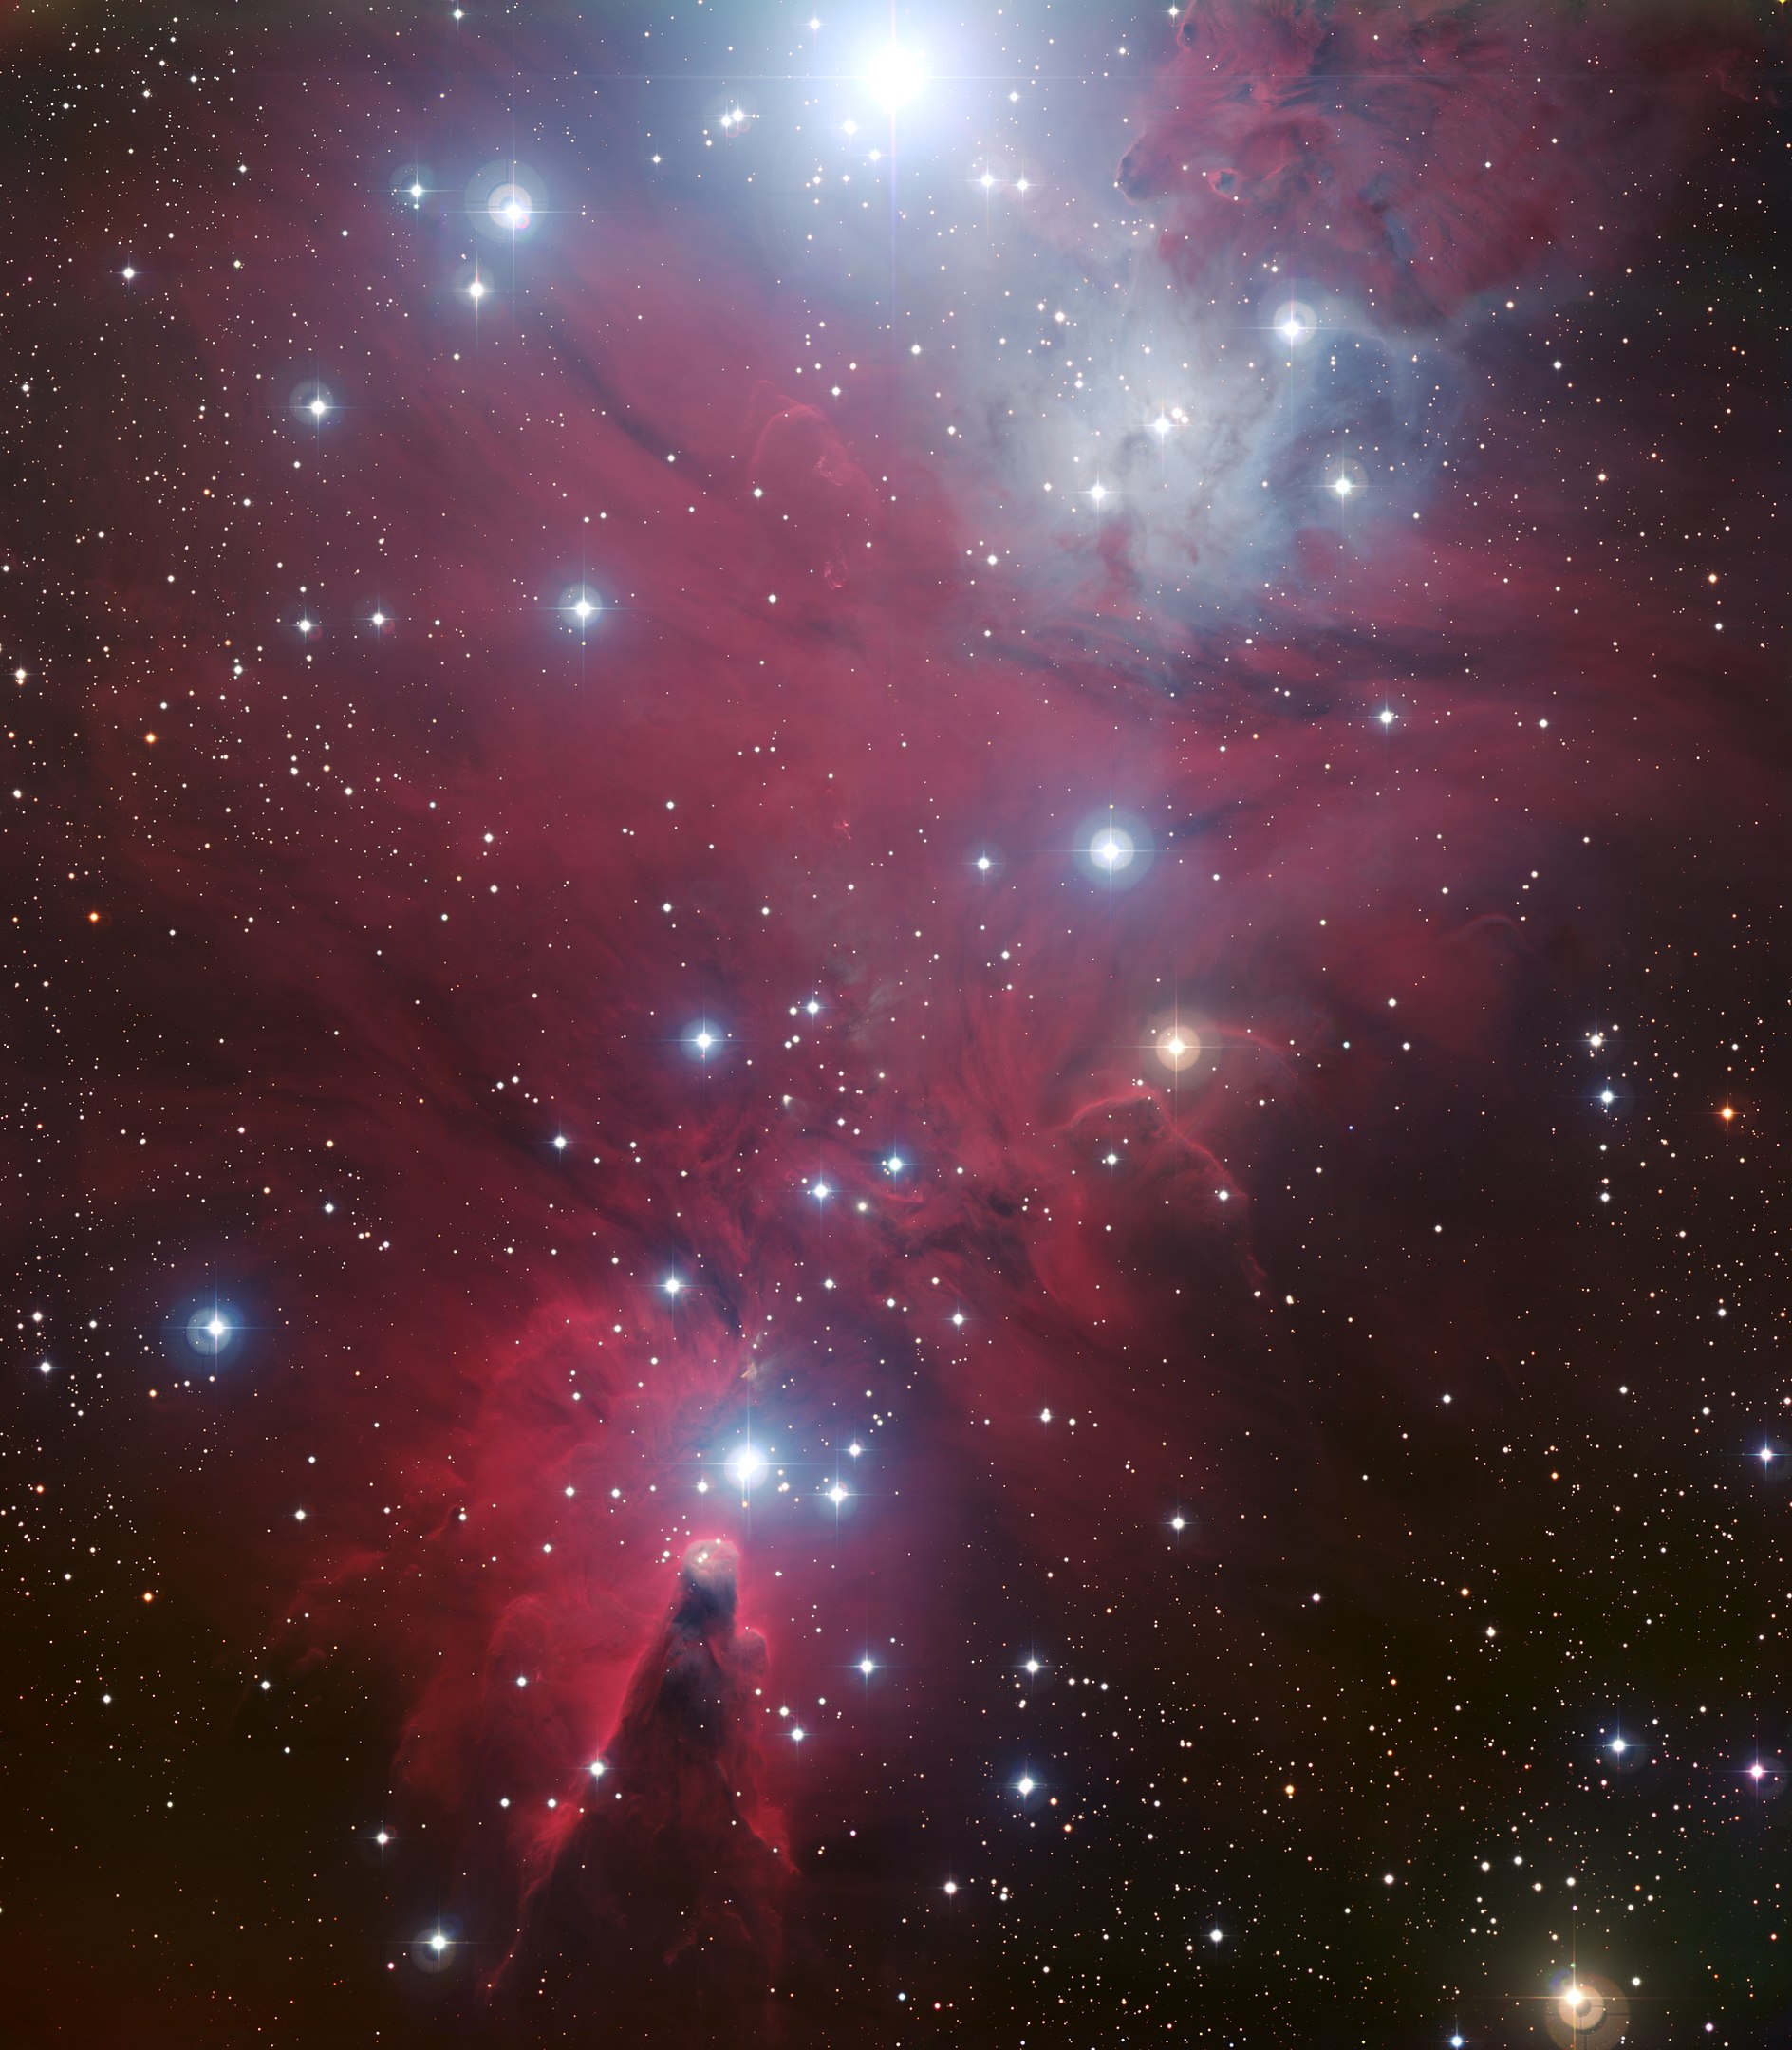 NGC 2264 star cluster, Monoceros